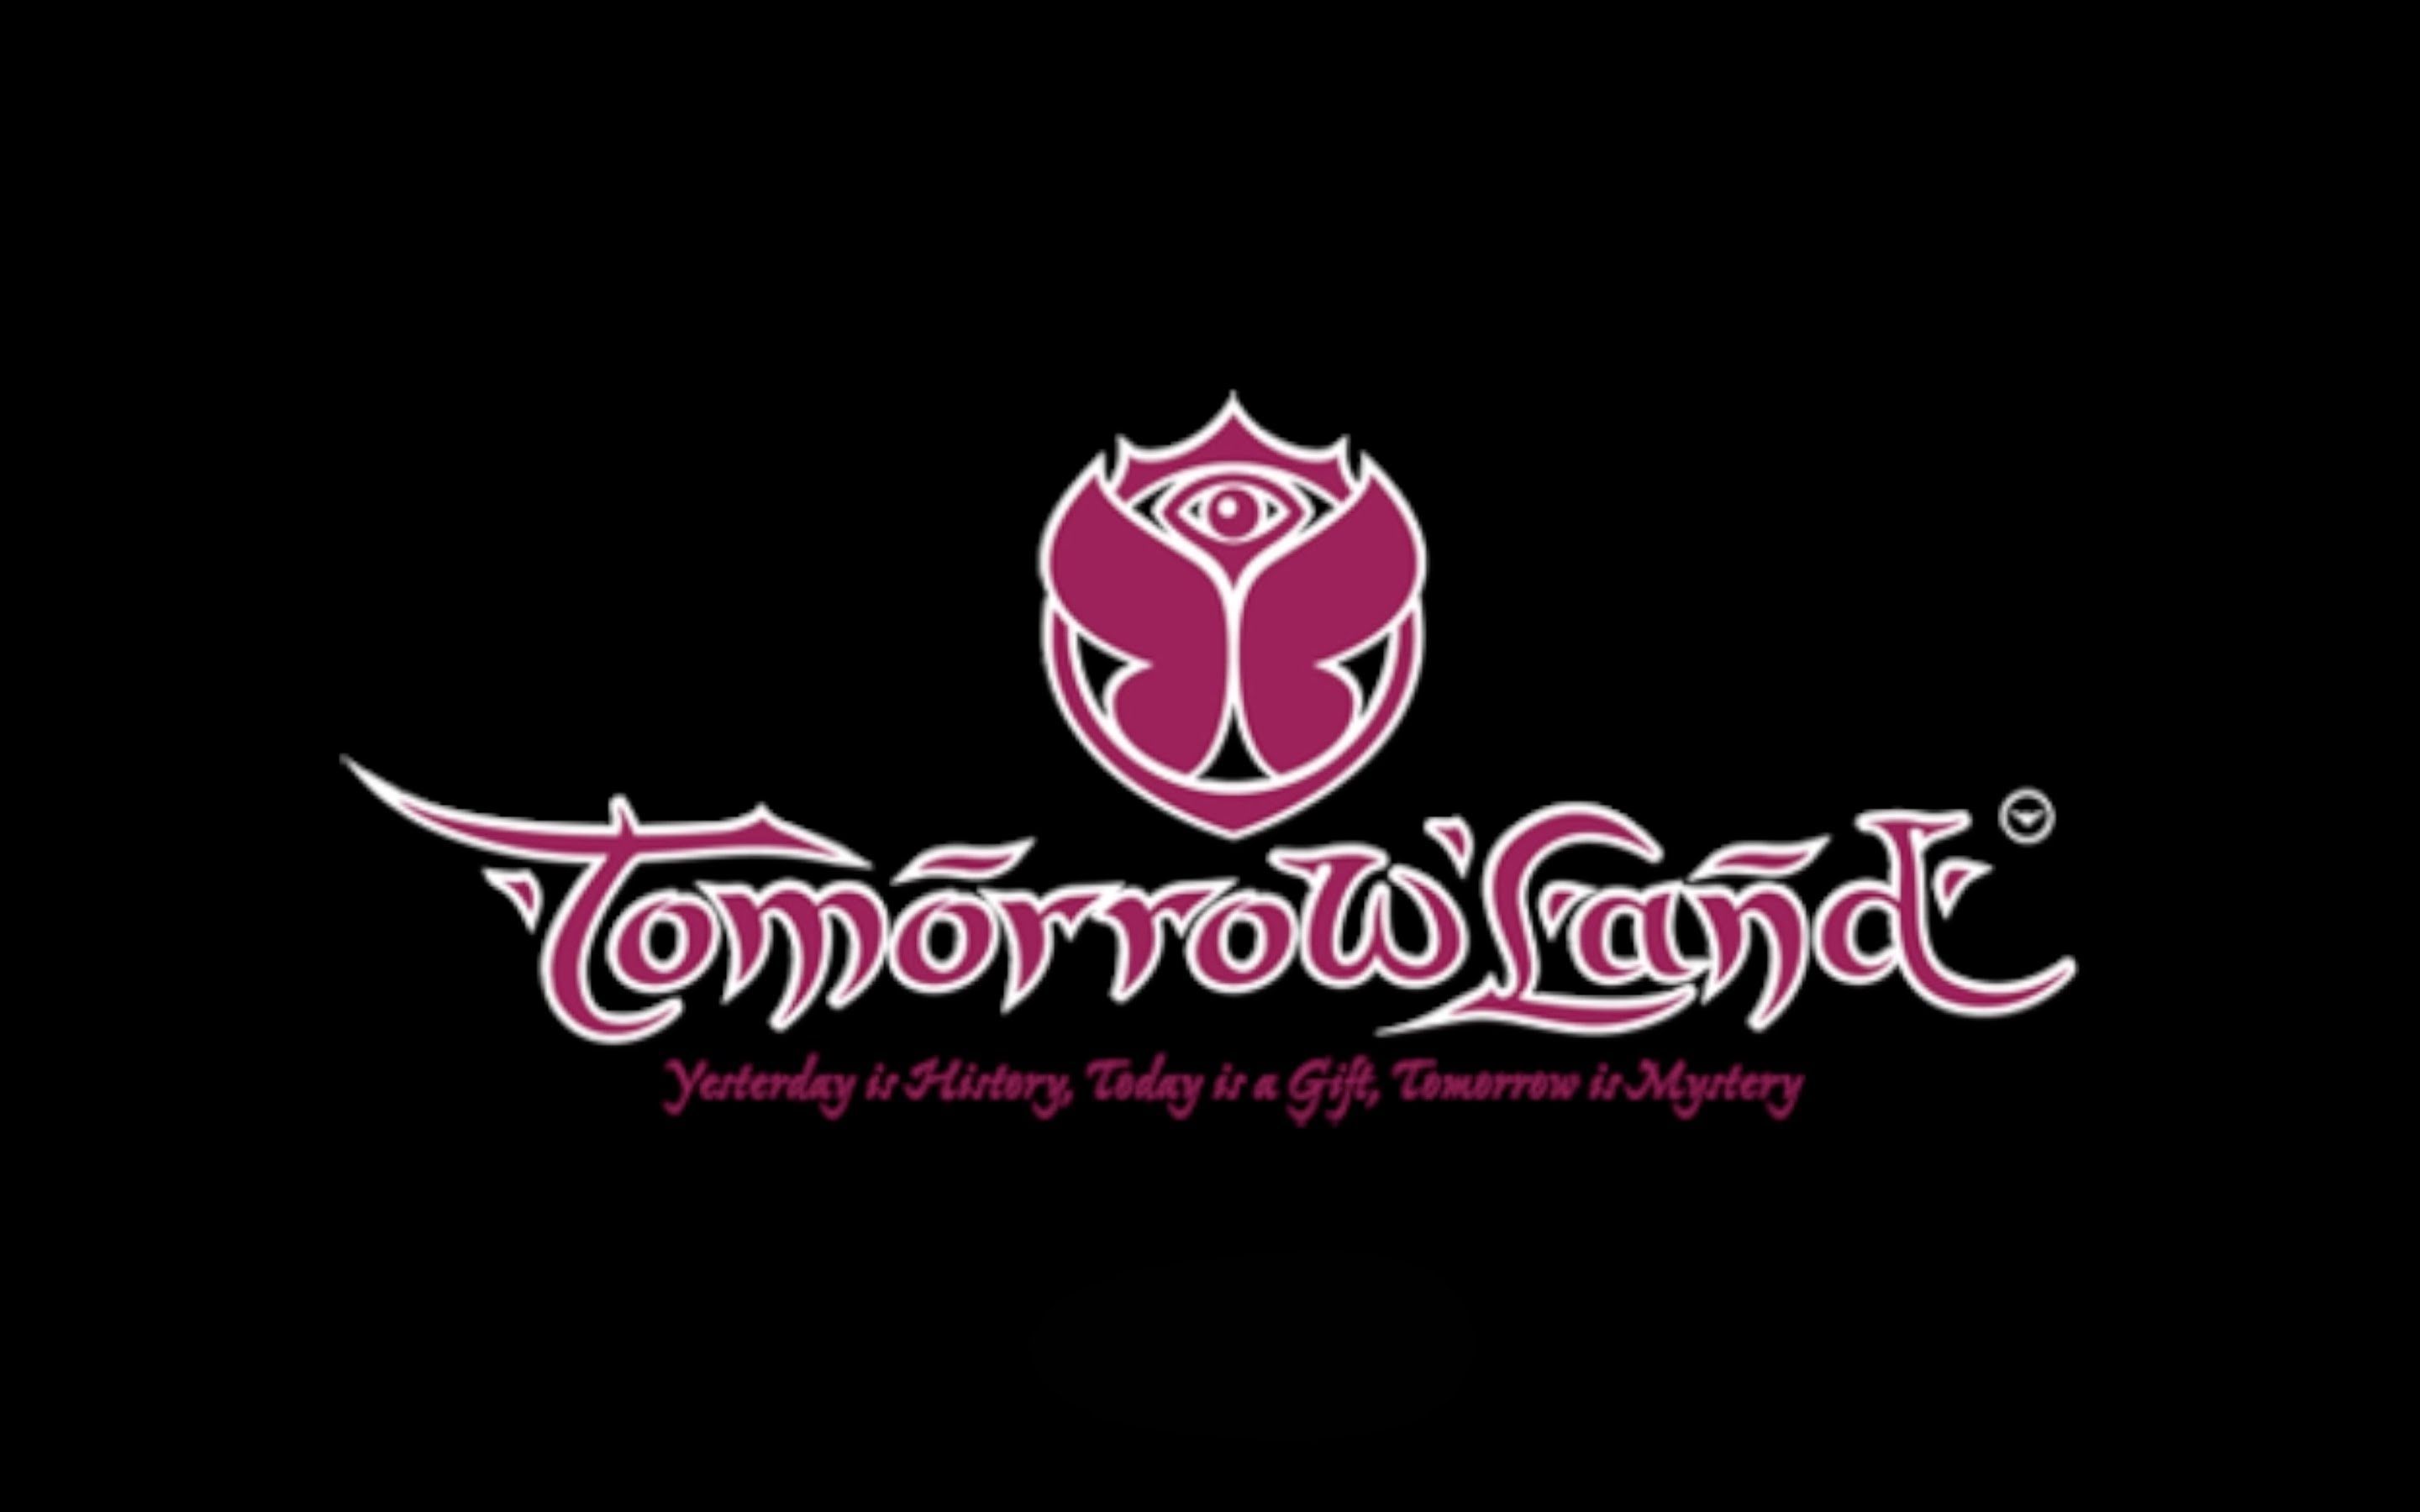 Tomorrowland Logo Wallpapers.